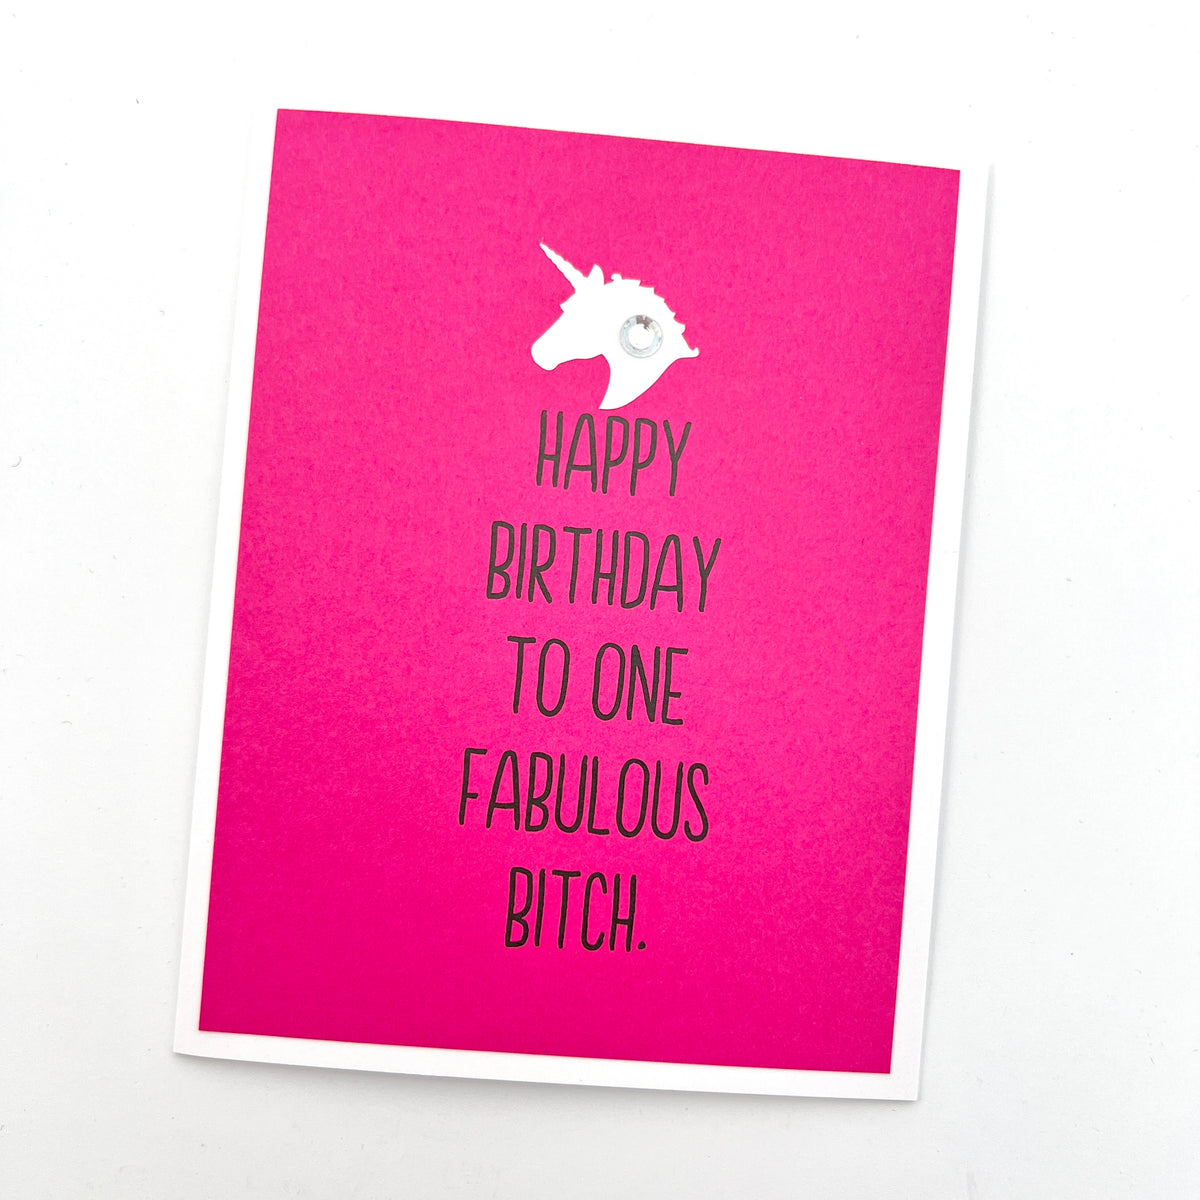 Birthday One Fabulous Bitch unicorn card